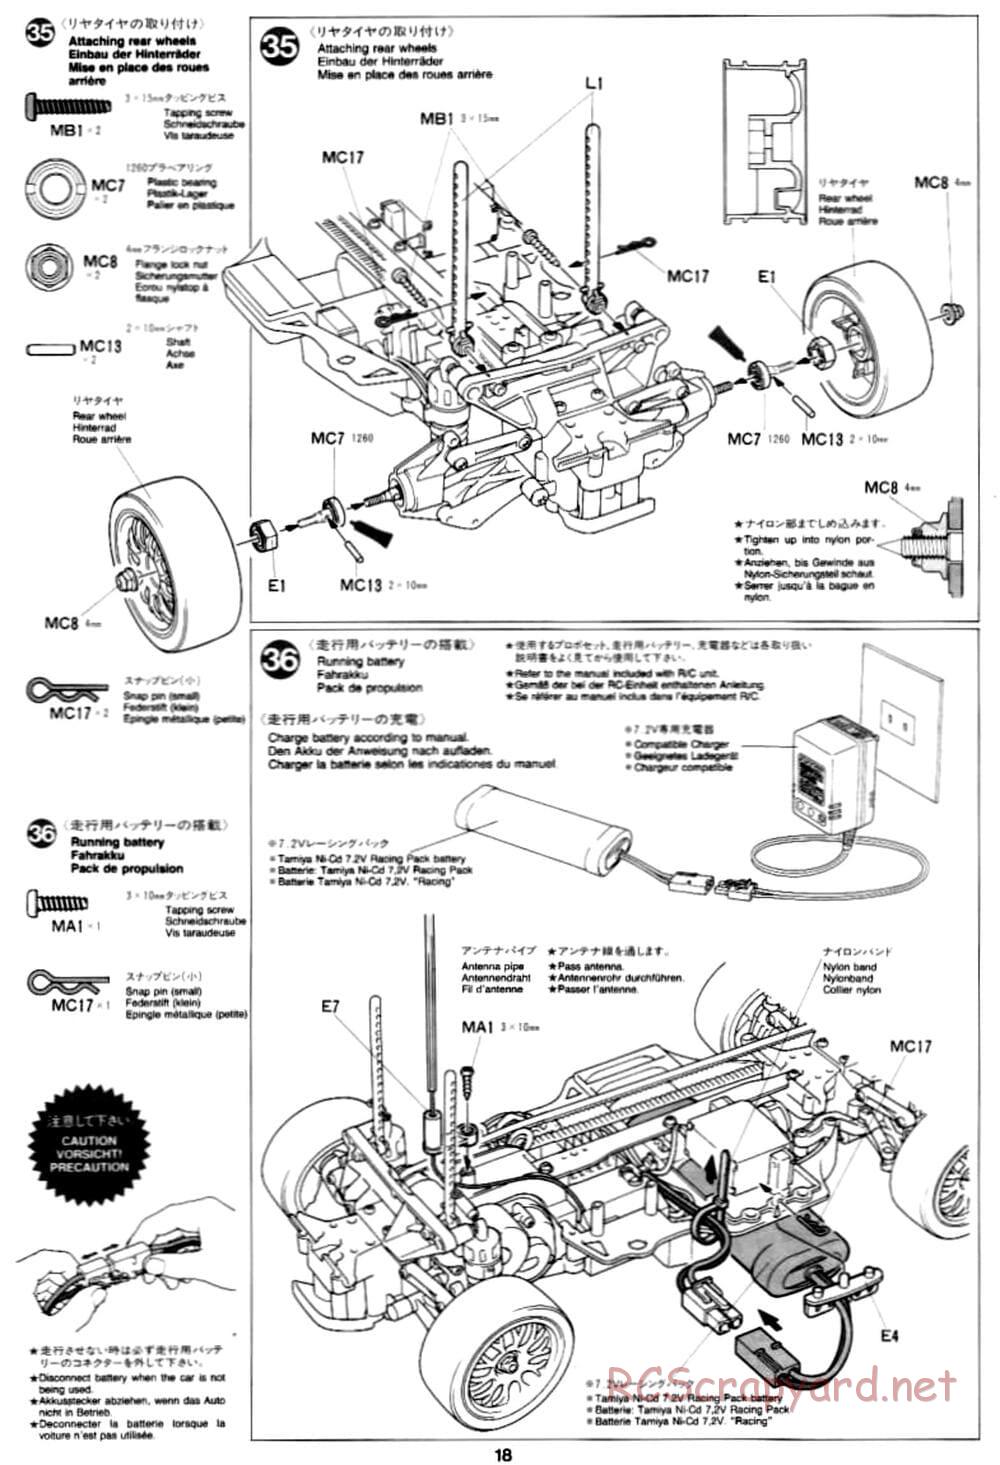 Tamiya - Mercedes CLK-GTR - TA-03R Chassis - Manual - Page 18